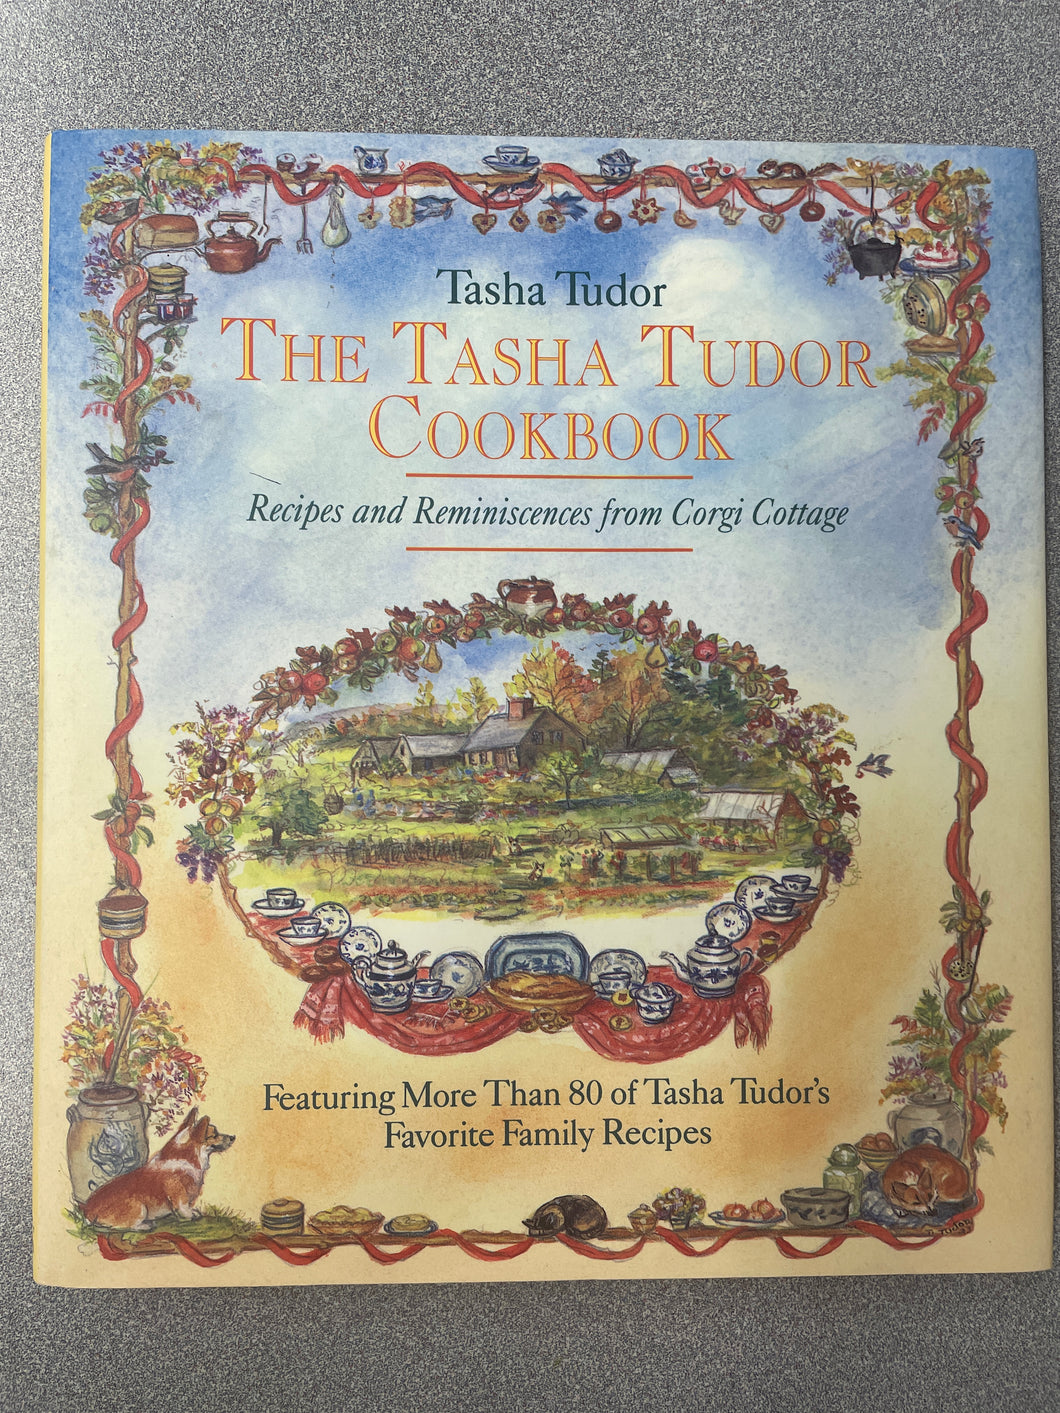 The Tasha Tudor Cookbook: Recipes and Reminiscences from Corgi Cottage Featuring More Than 80 of Tasha Tudor's Favorite Family Recipes, Tudor, Tasha [1993]  CO 4/24